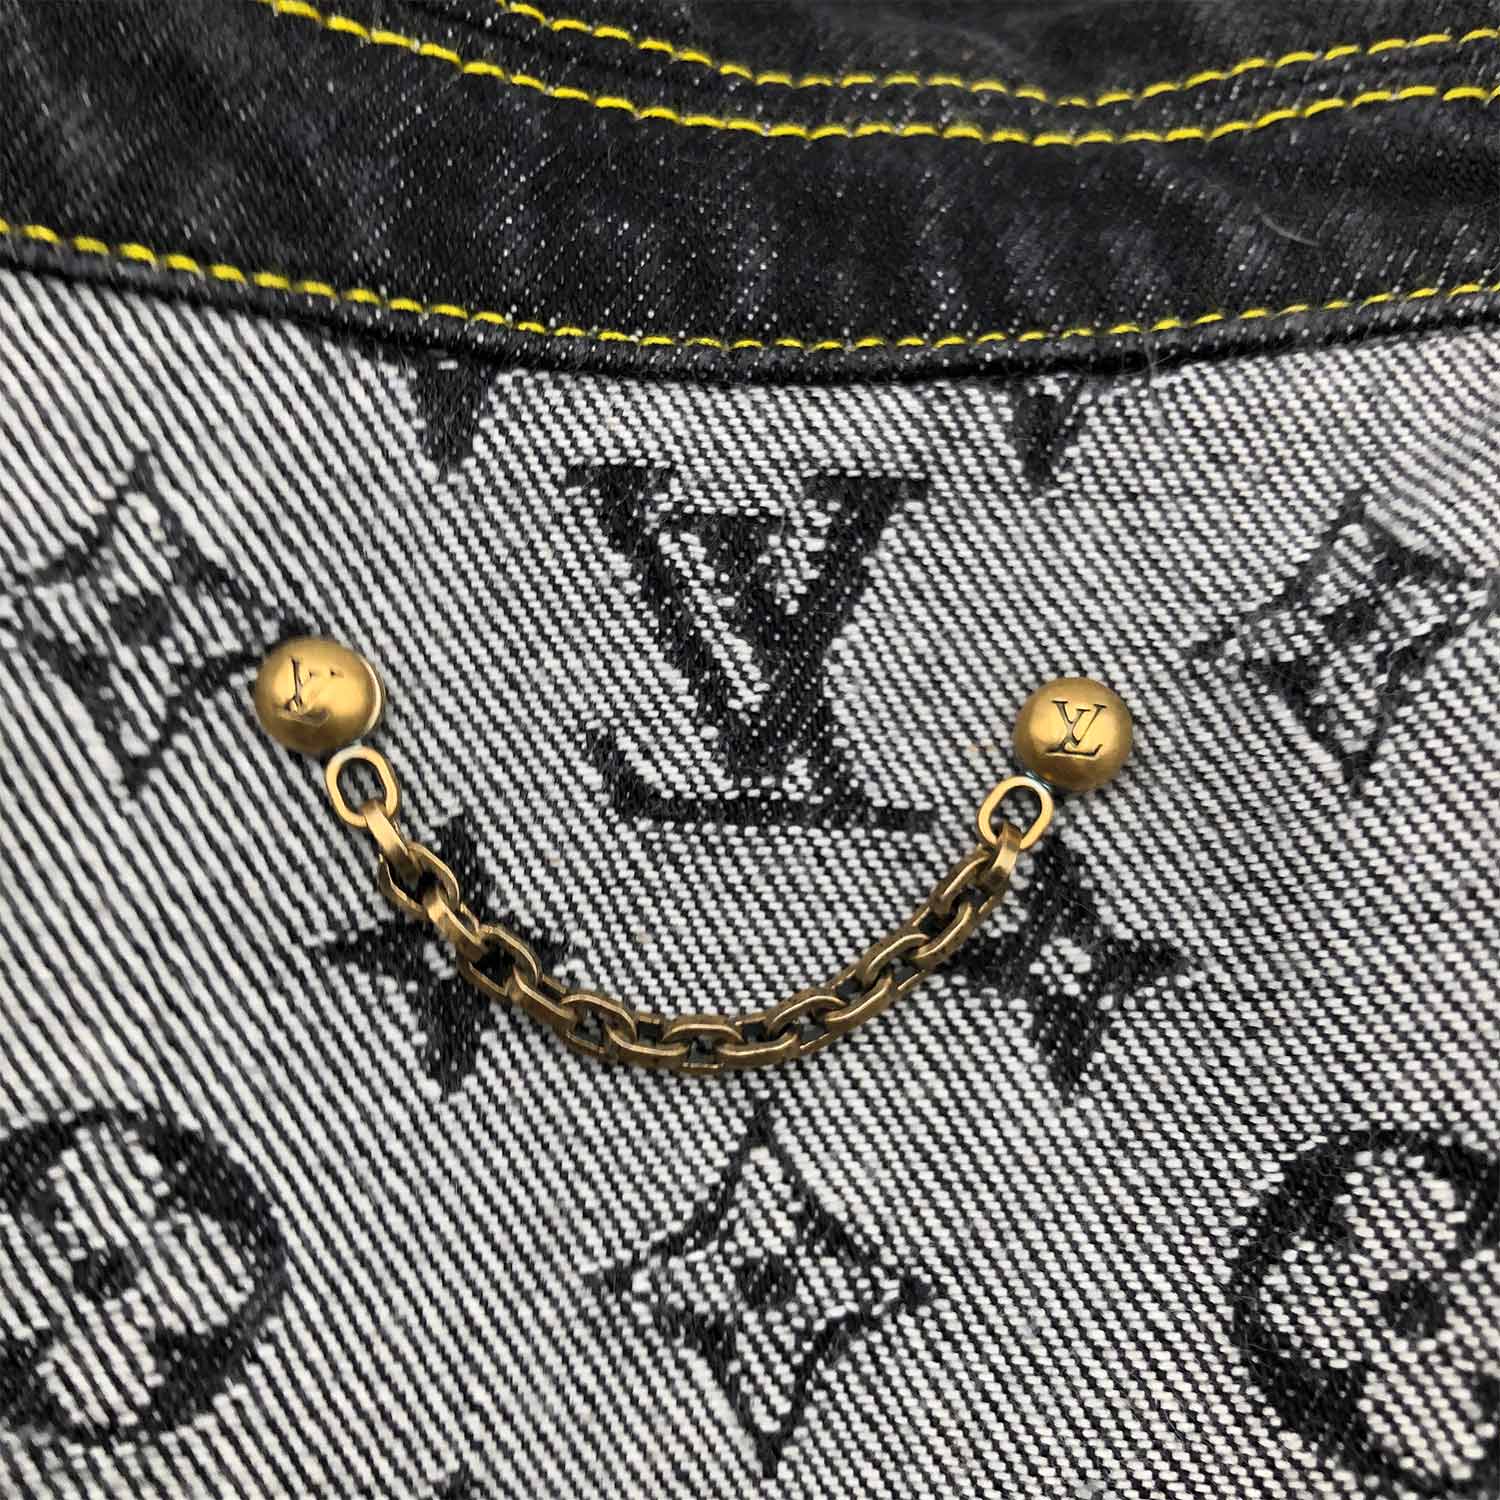 Louis Vuitton x Nigo 2022 Monogram Crazy Denim Jacket - Black Outerwear,  Clothing - LVNOU20261